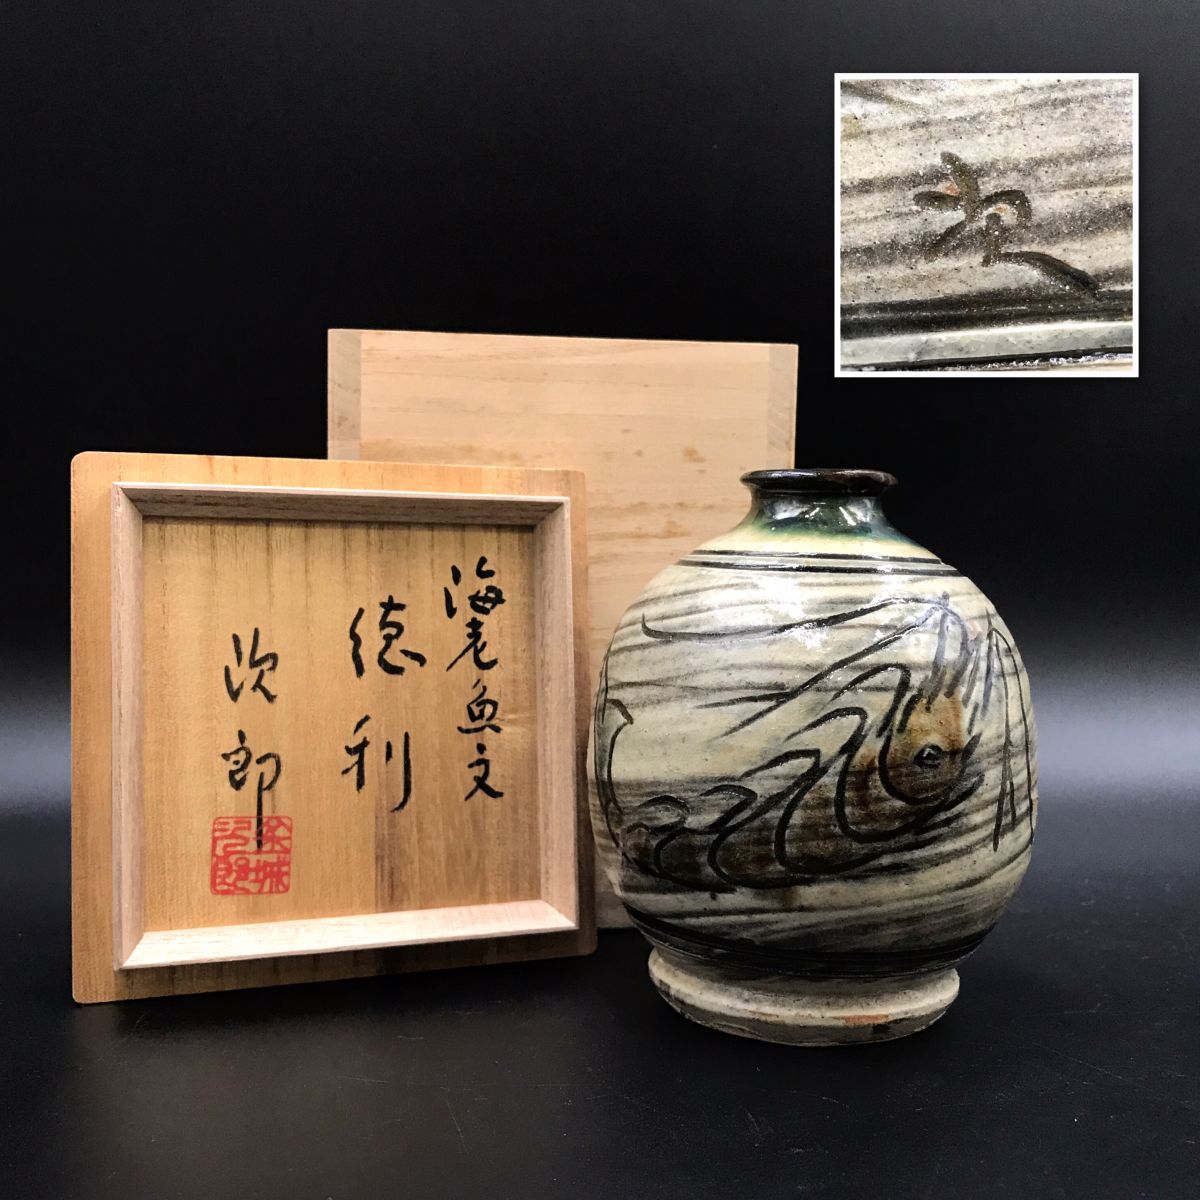  Tsuboya . human national treasure gold castle next . work sea . fish writing sake bottle also box [312-010#60]